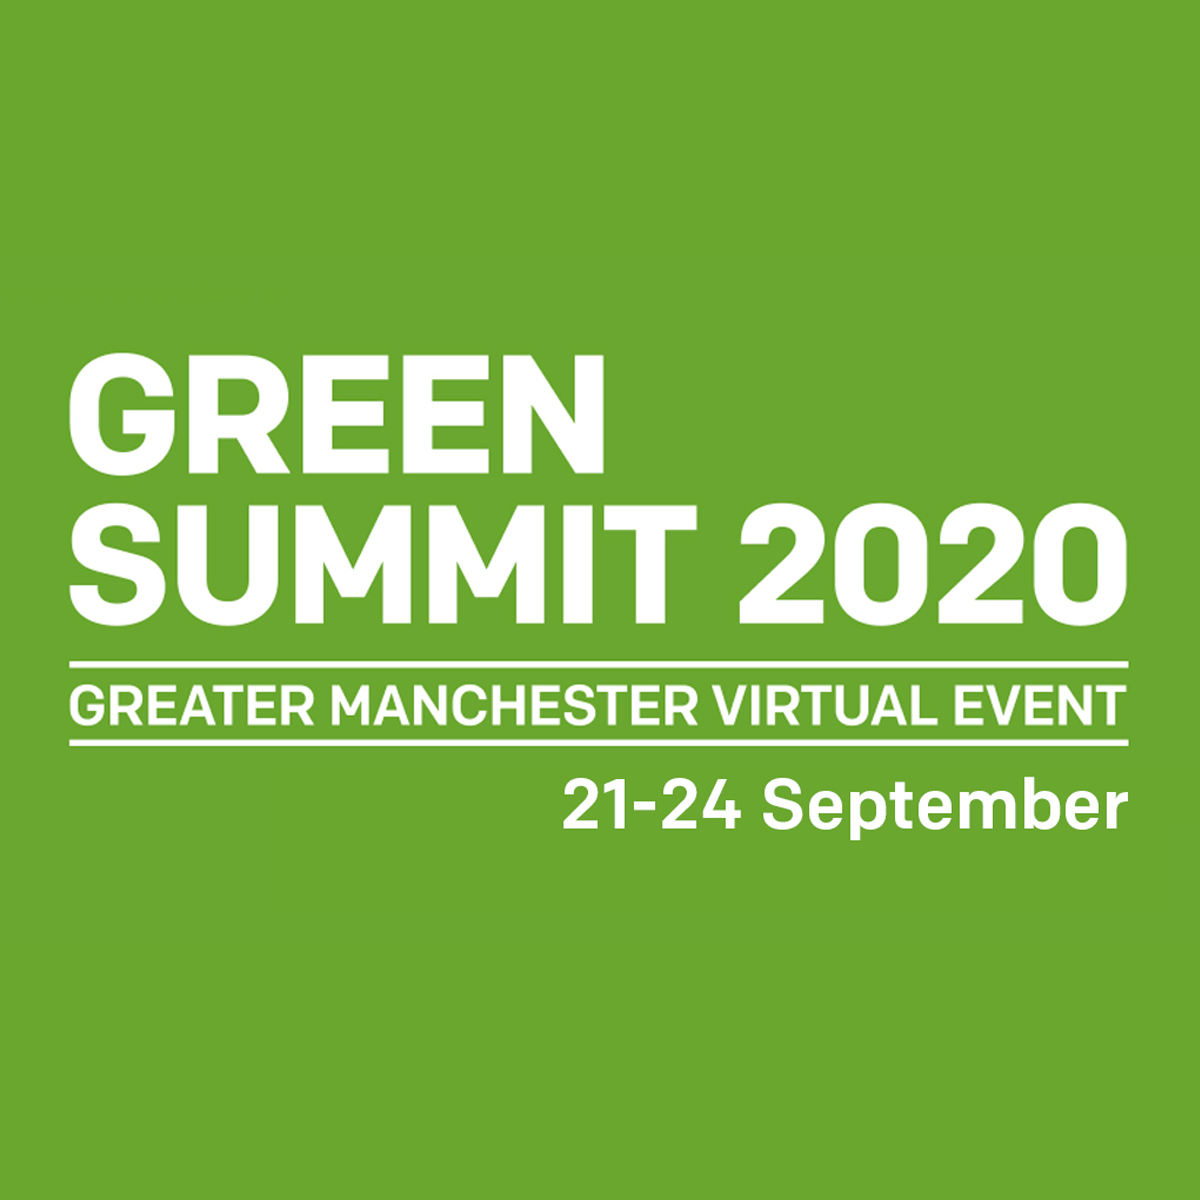 https://www.pro-manchester.co.uk/wp-content/uploads/2020/09/Green_Summit_2020_LinkedIn2.jpg